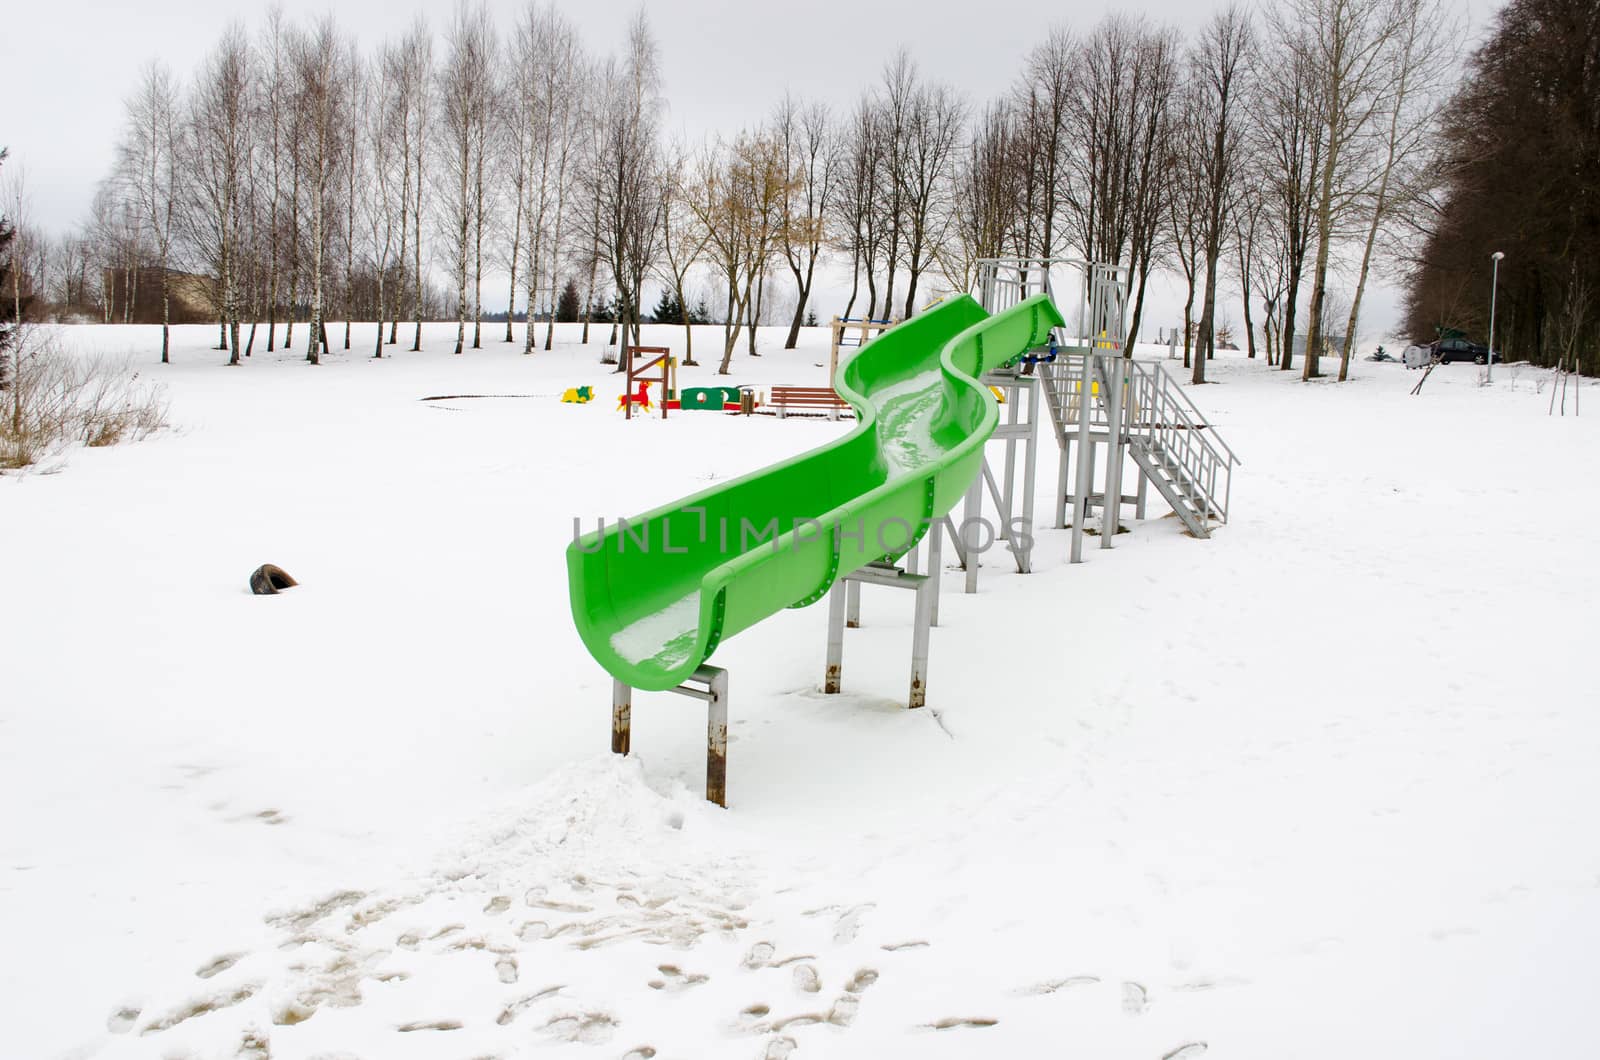 outdoor water park slide on frozen snowy lake in winter playground.